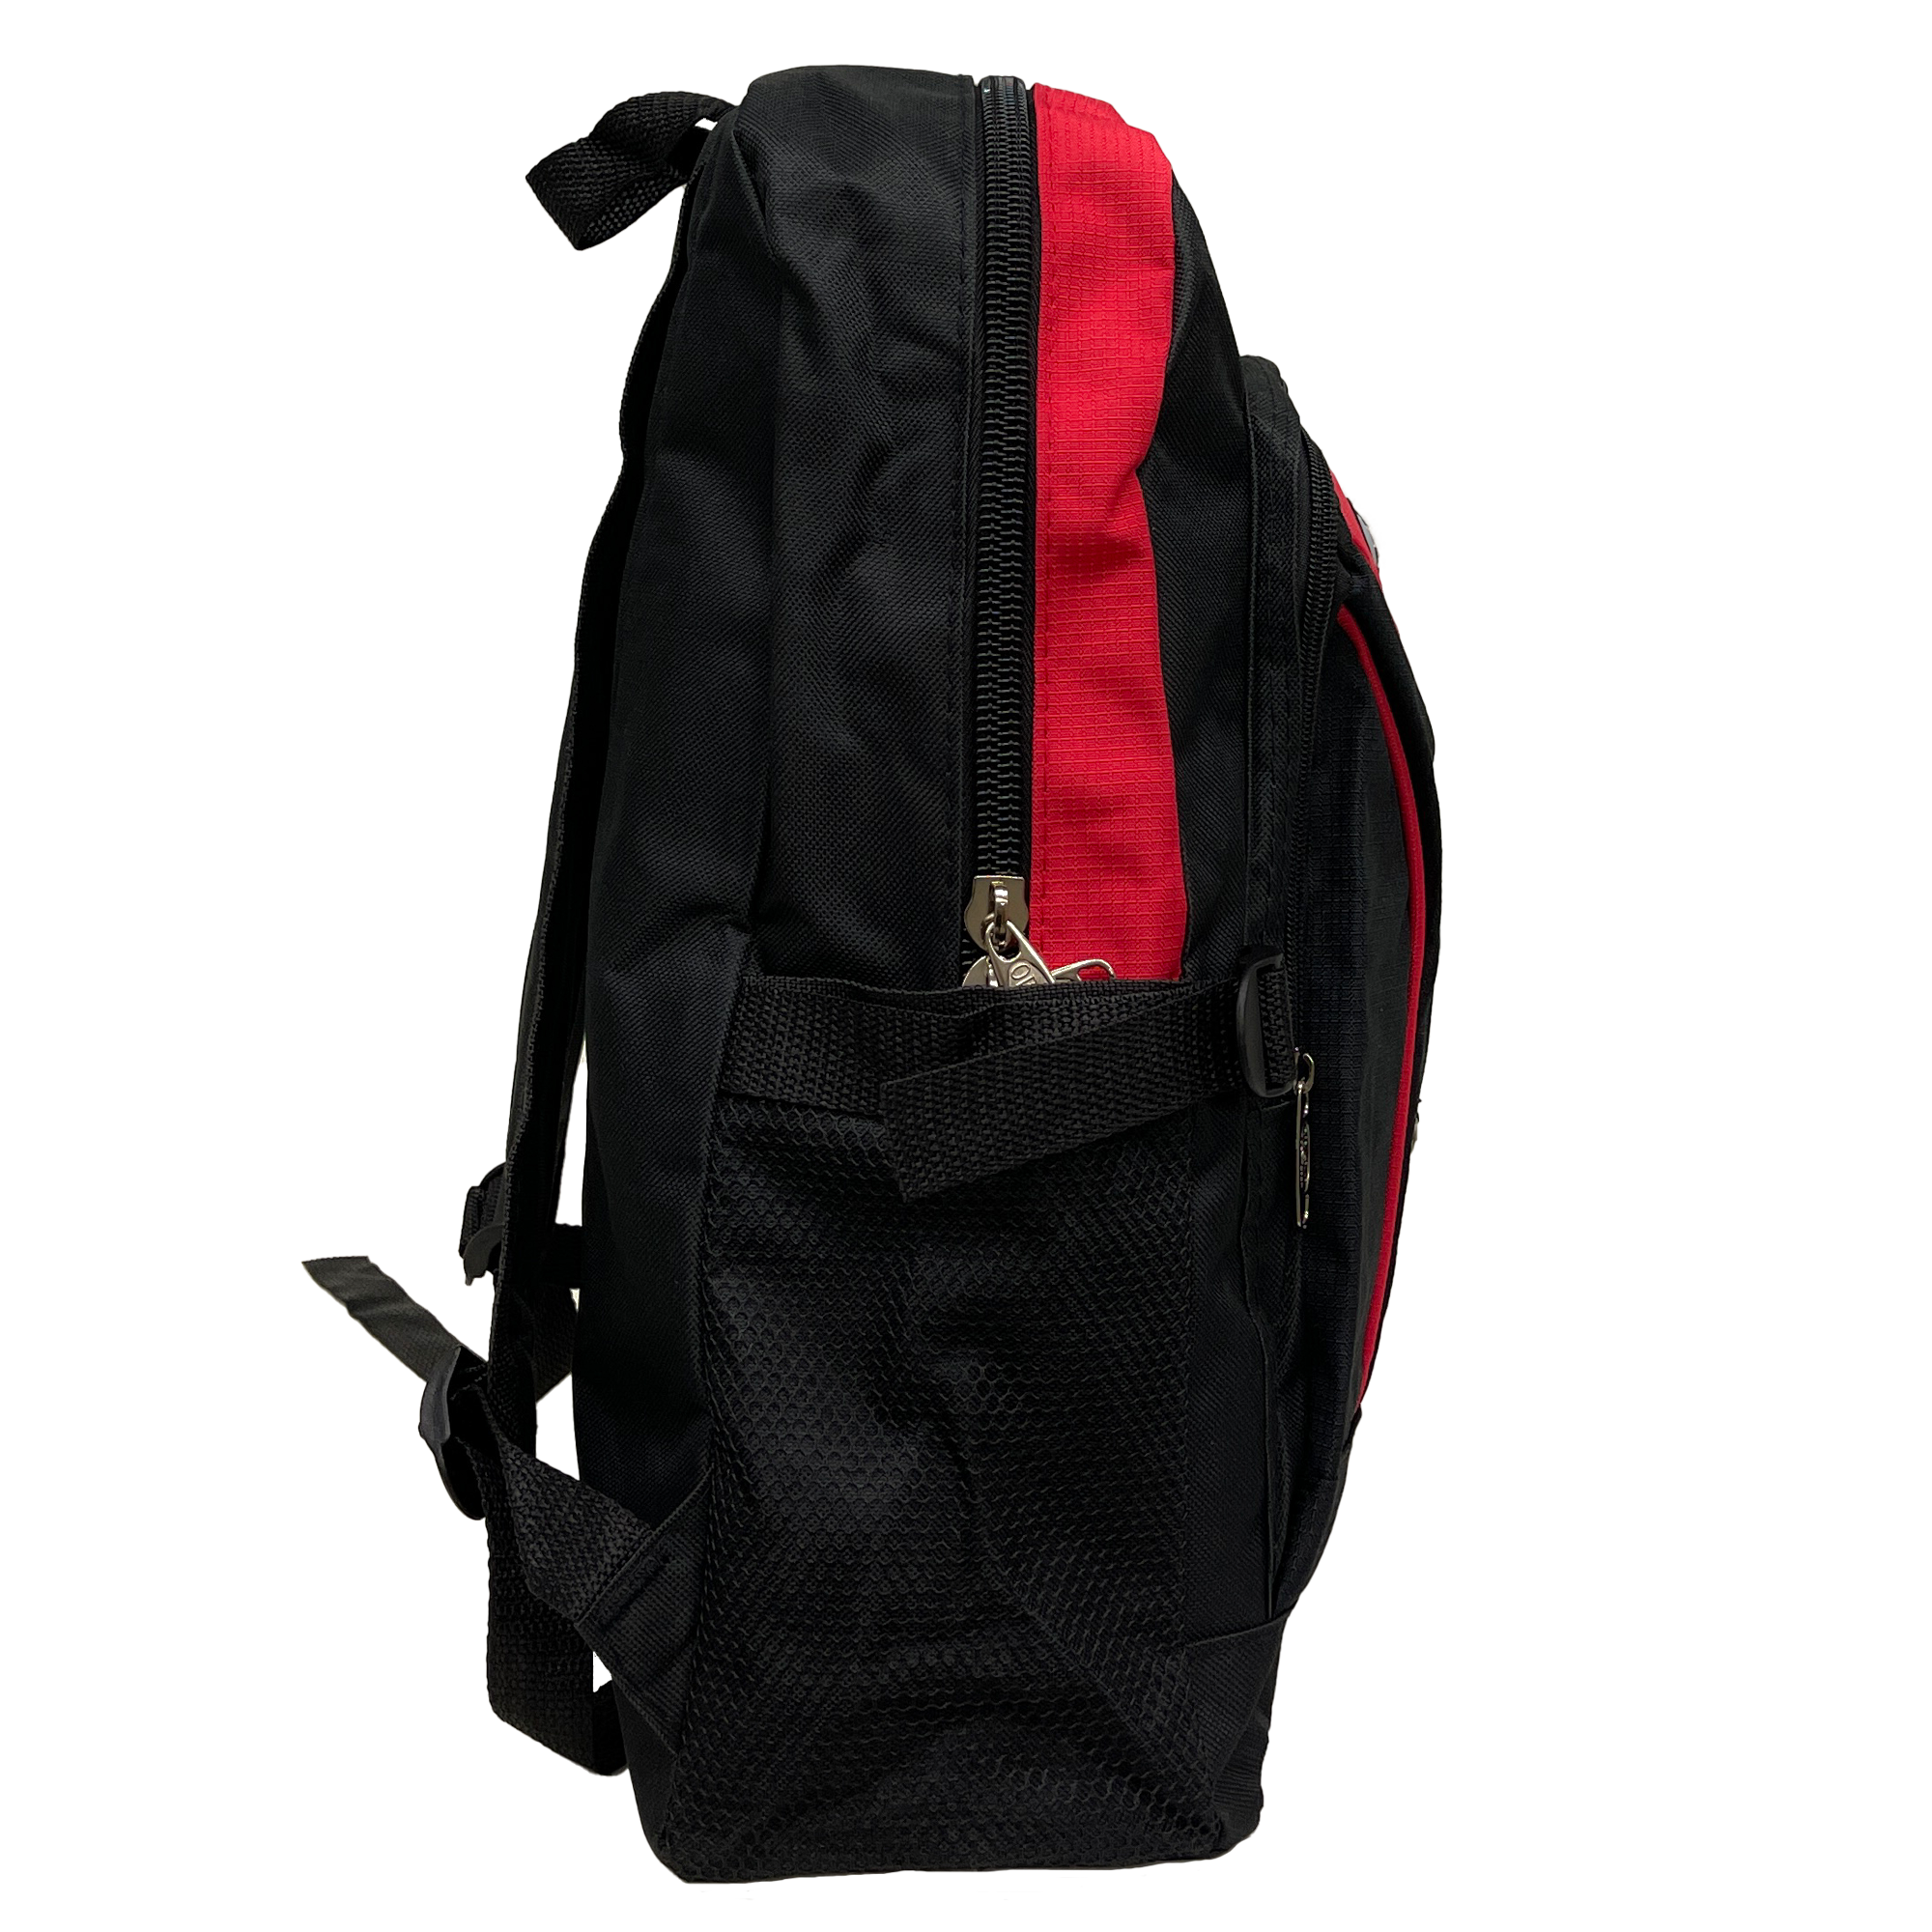 Or&mi Backpack Sportivo: Comfort e Design per Avventure Quotidiane  45x34cm - Allingro